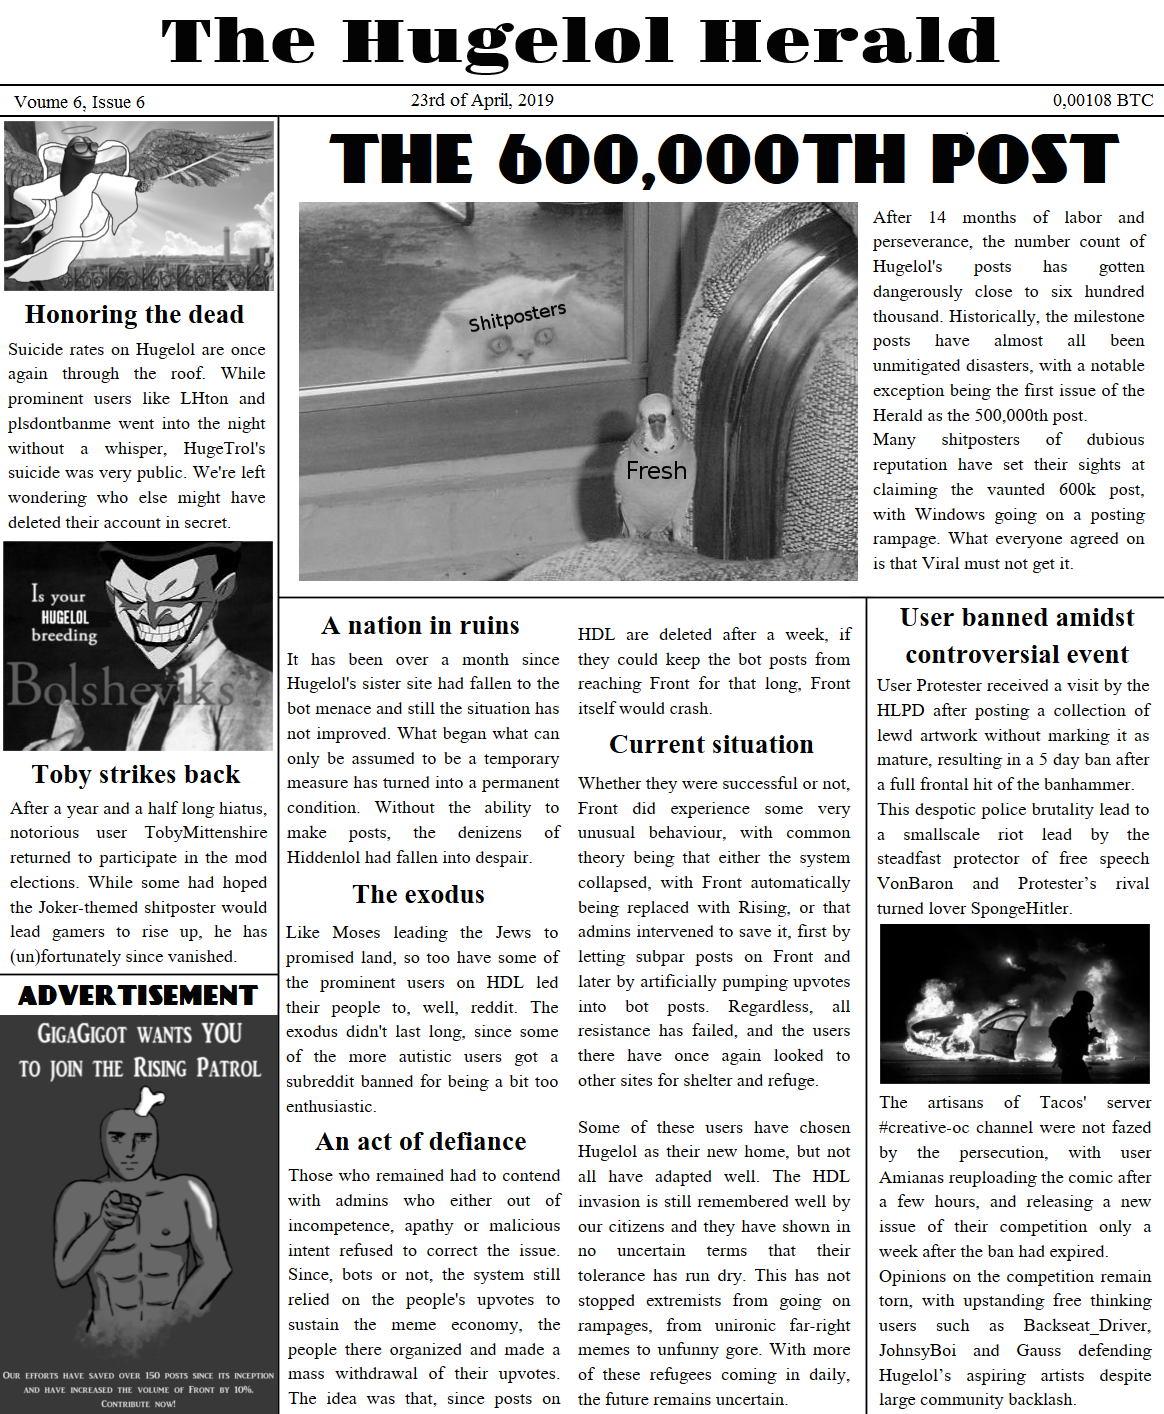 Hugelol Herald, the 600k post edition